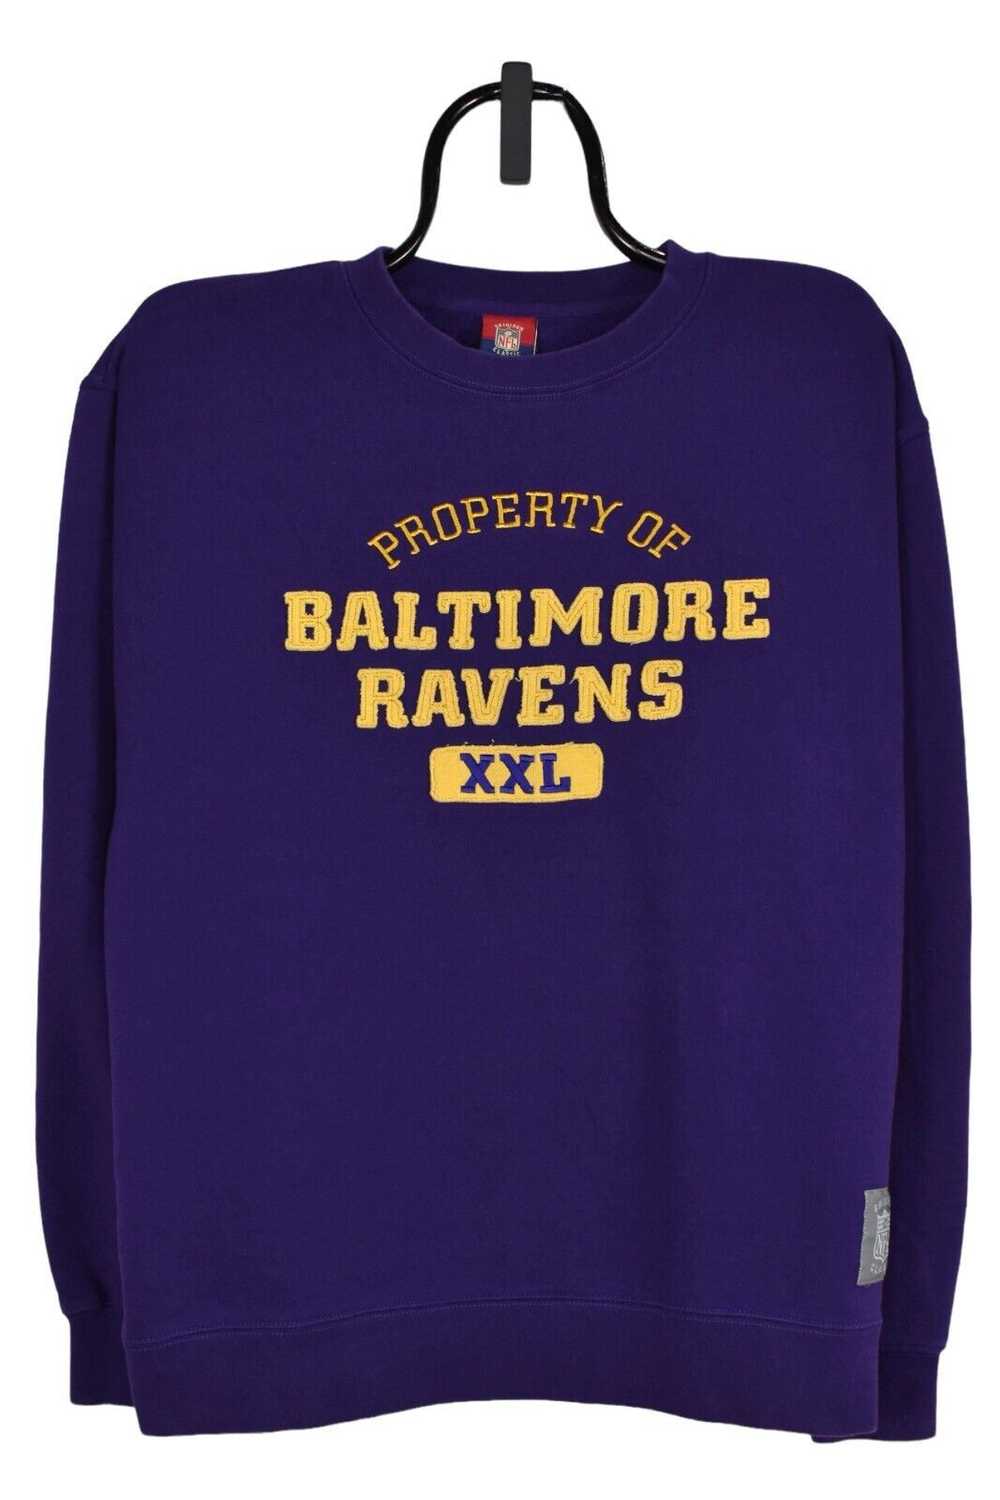 NFL Vintage Baltimore Ravens sweatshirt (L), purp… - image 1